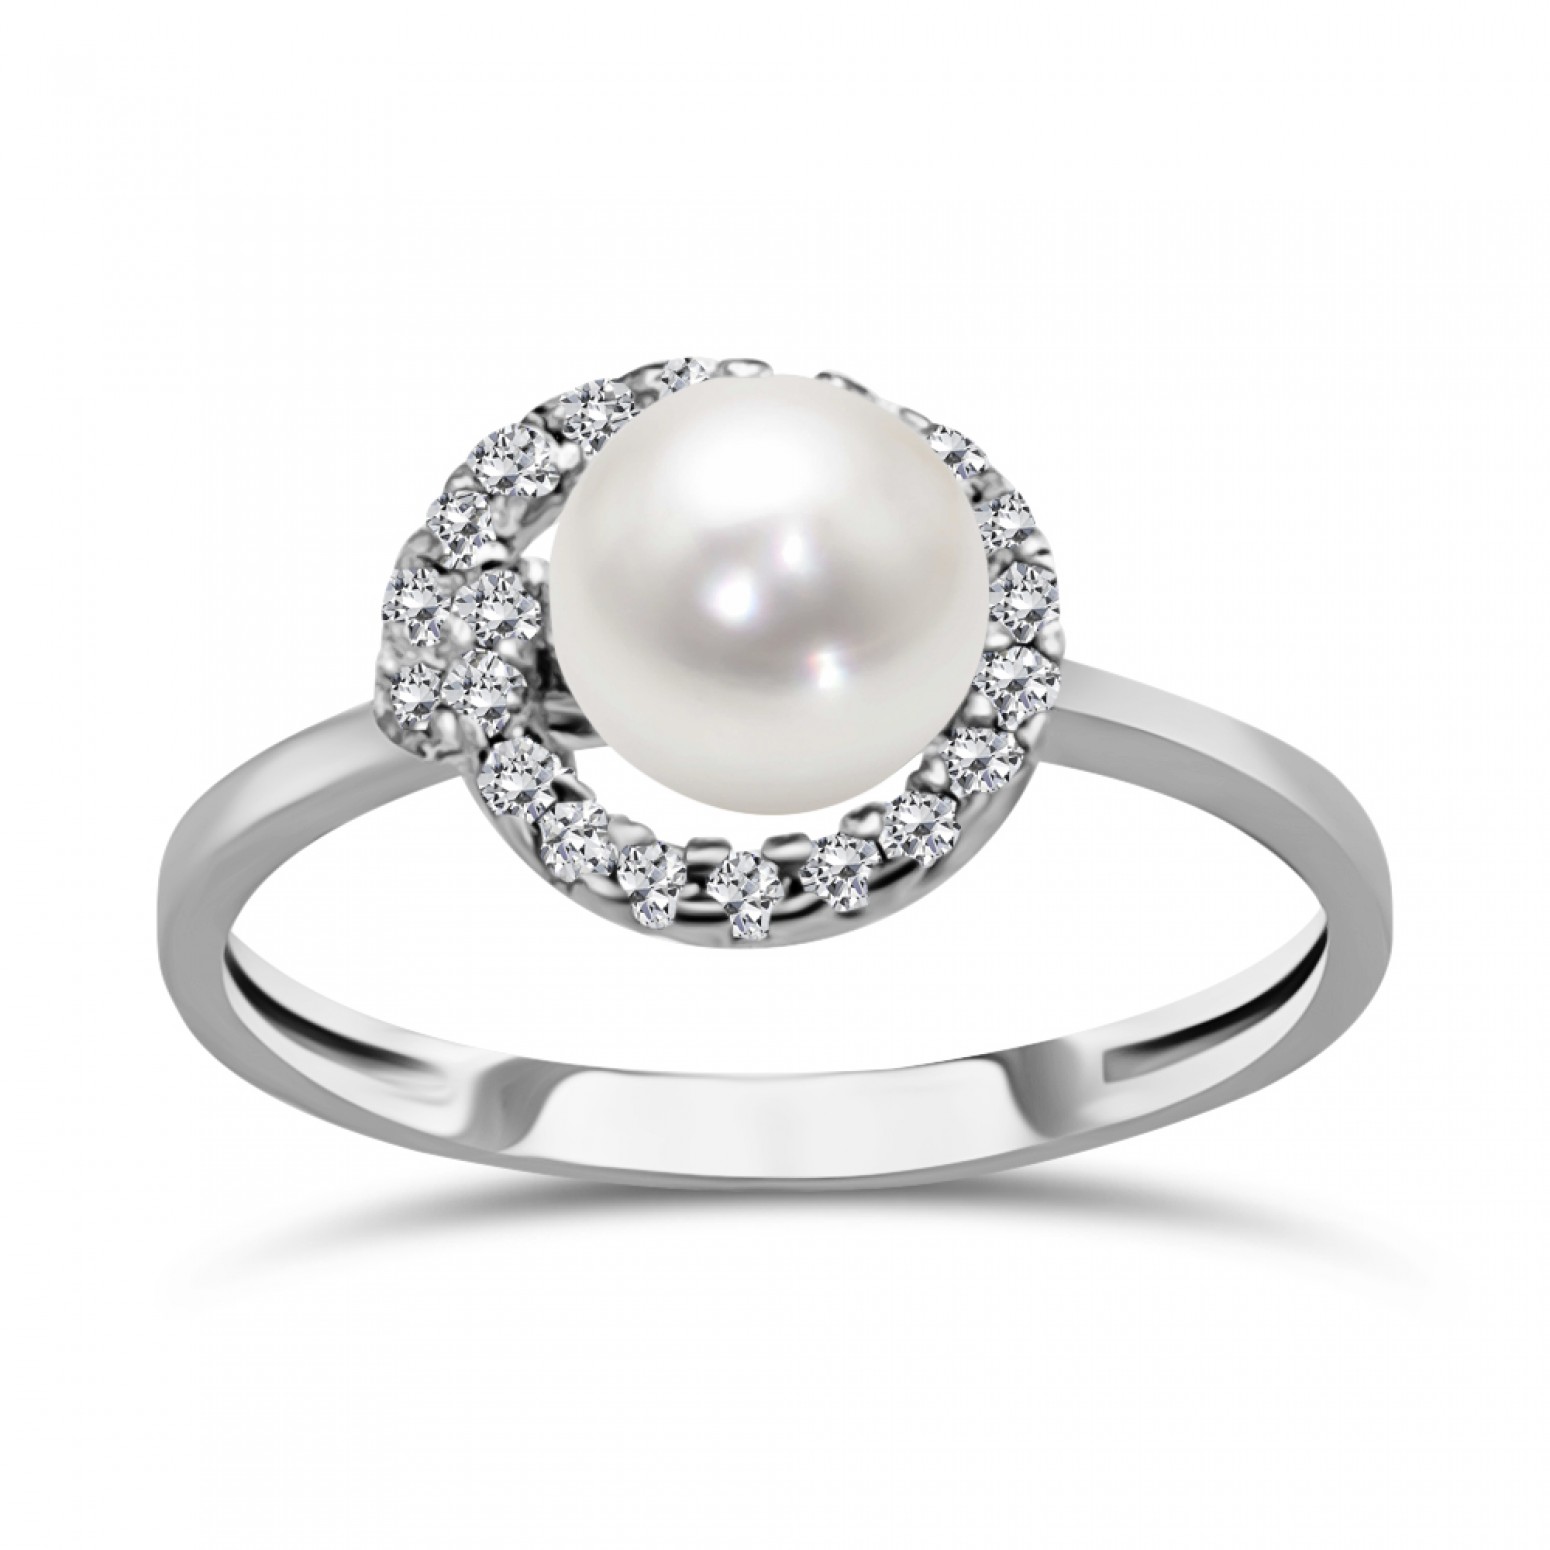 Multistone ring 14K white gold with pearl and zircon, da3617 ENGAGEMENT RINGS Κοσμηματα - chrilia.gr